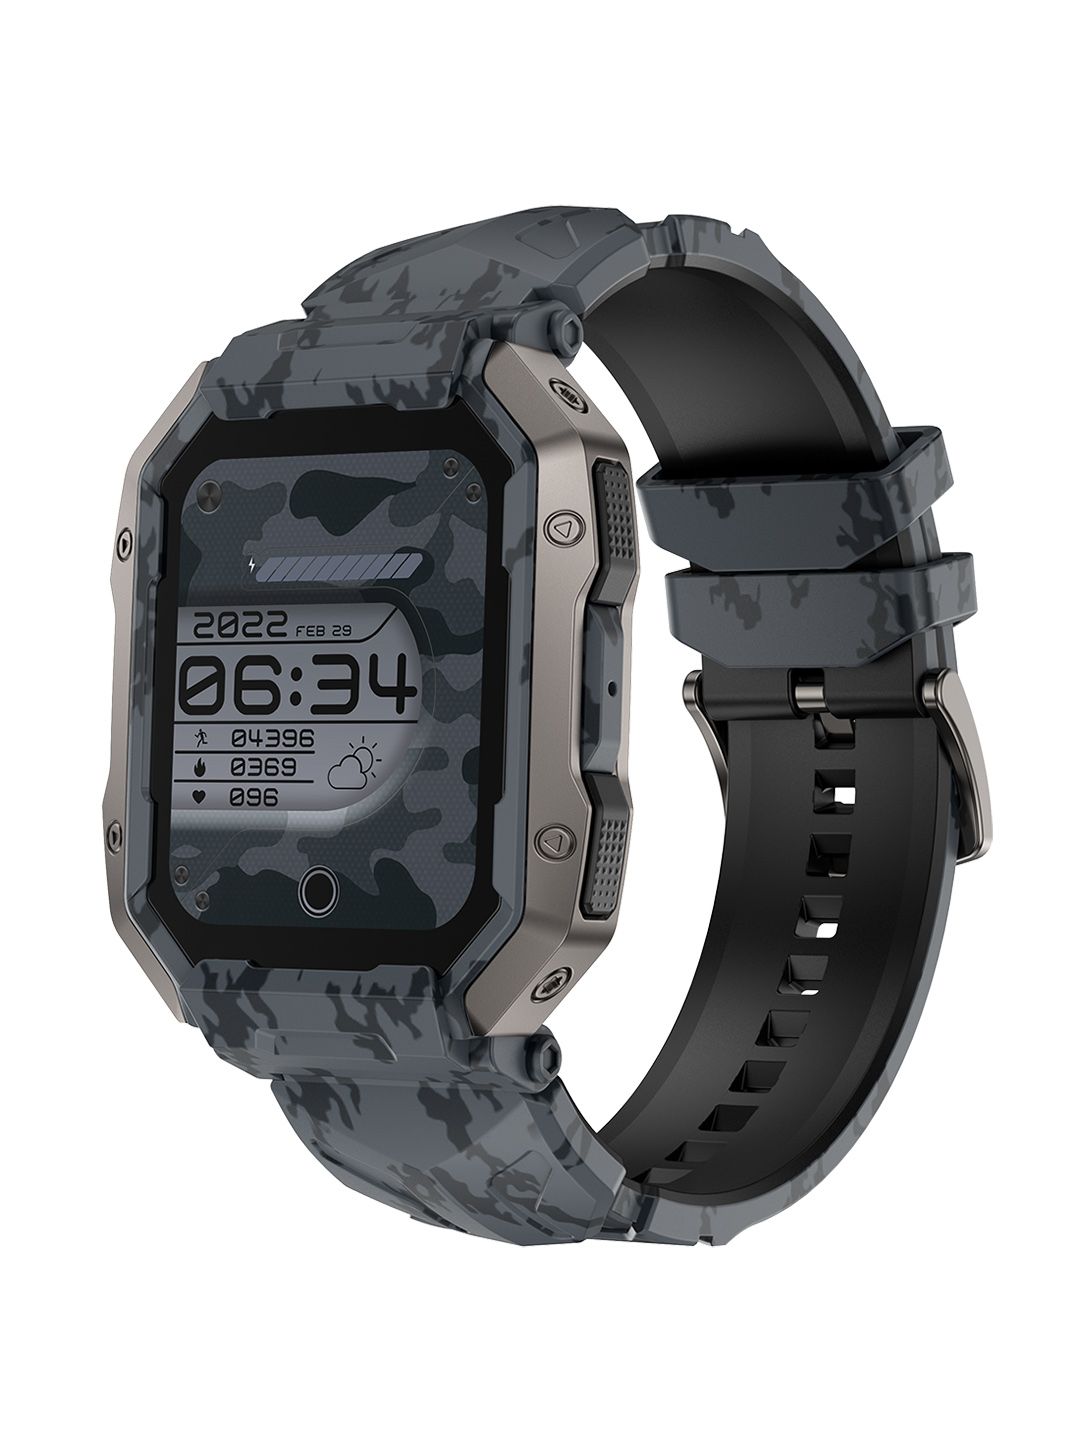 Fire-Boltt Grey Cobra 1.78 inch AMOLED Army Grade Build Smart Watch